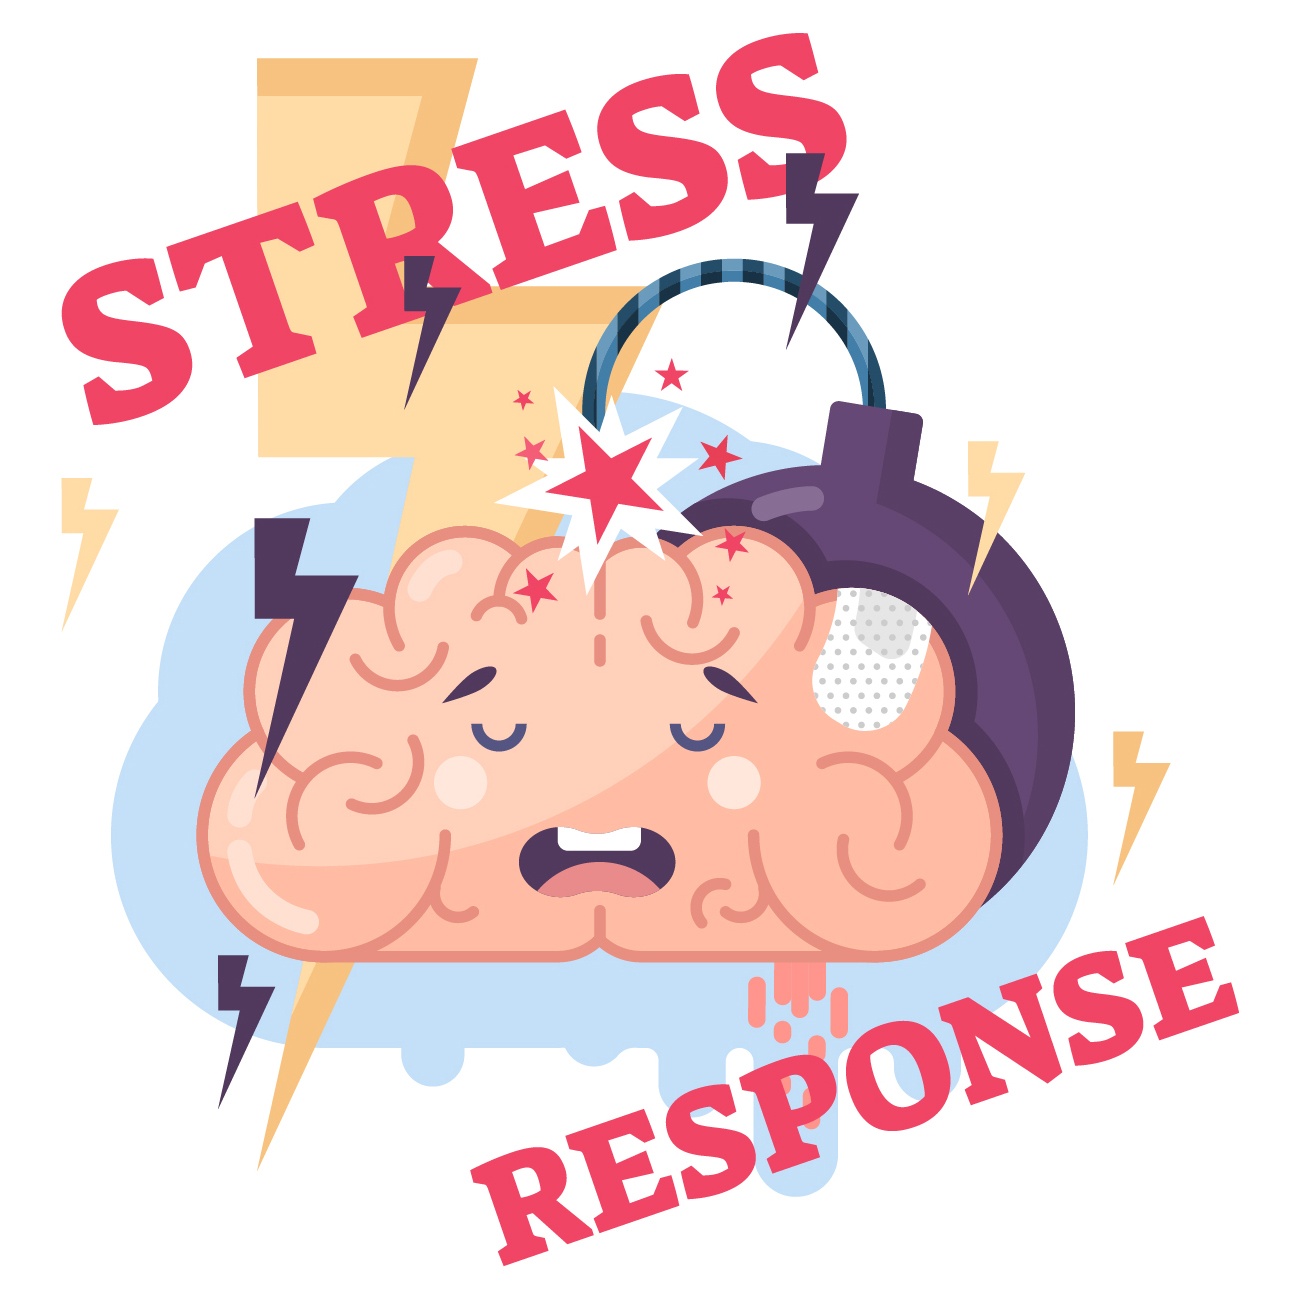 Managing “Stress Response” during COVID 19.